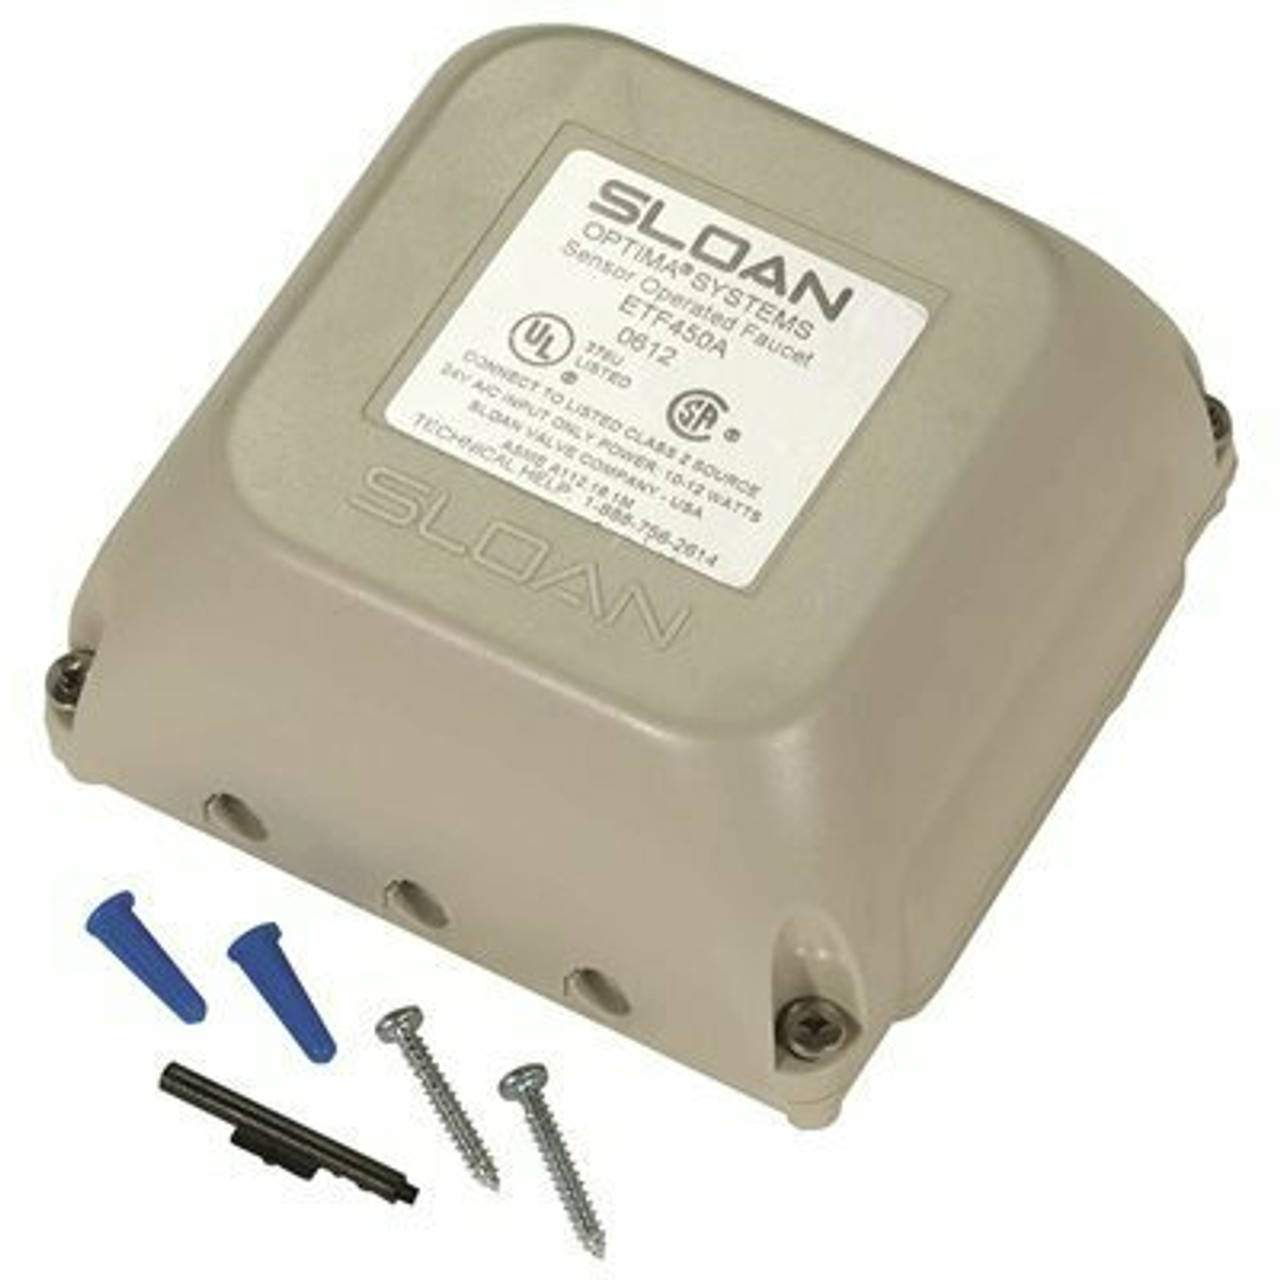 Sloan Valve Company Etf450A Splash Proof Junction Box